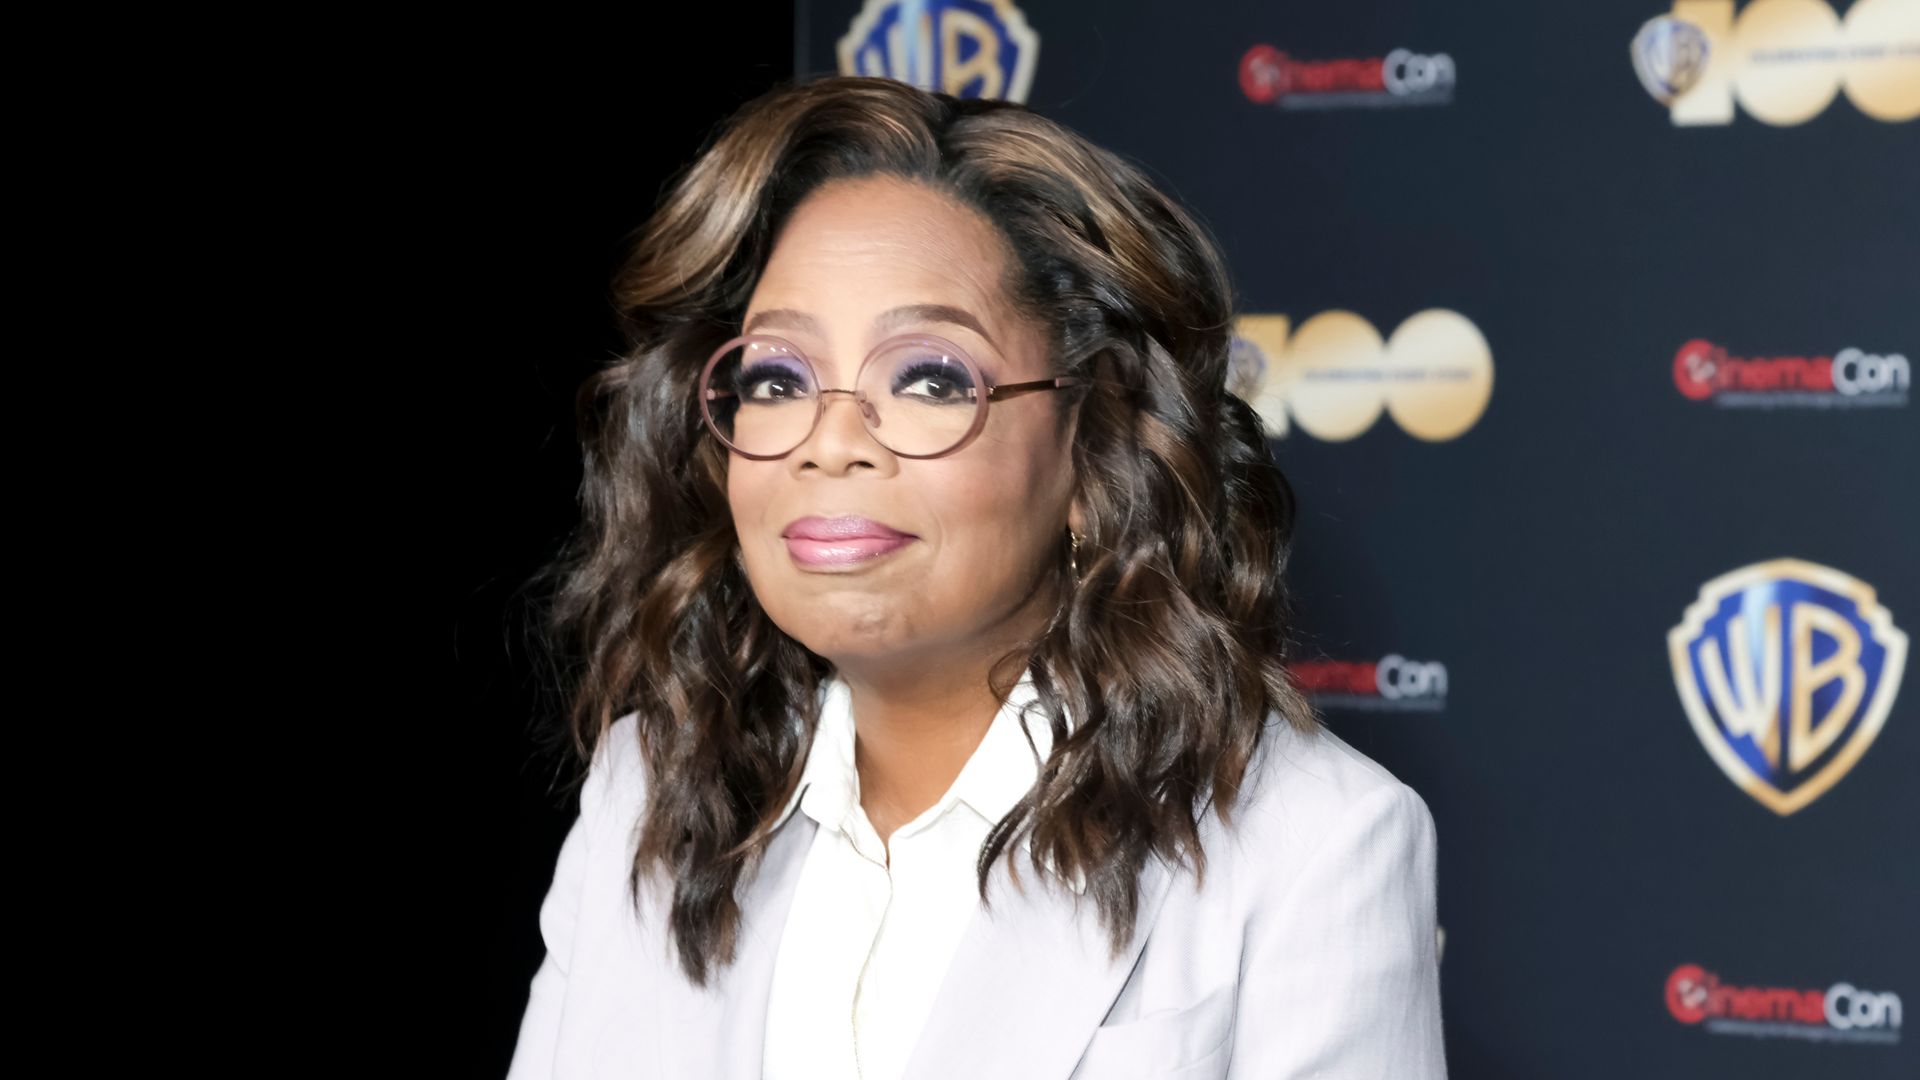 Oprah's healthy diet secrets